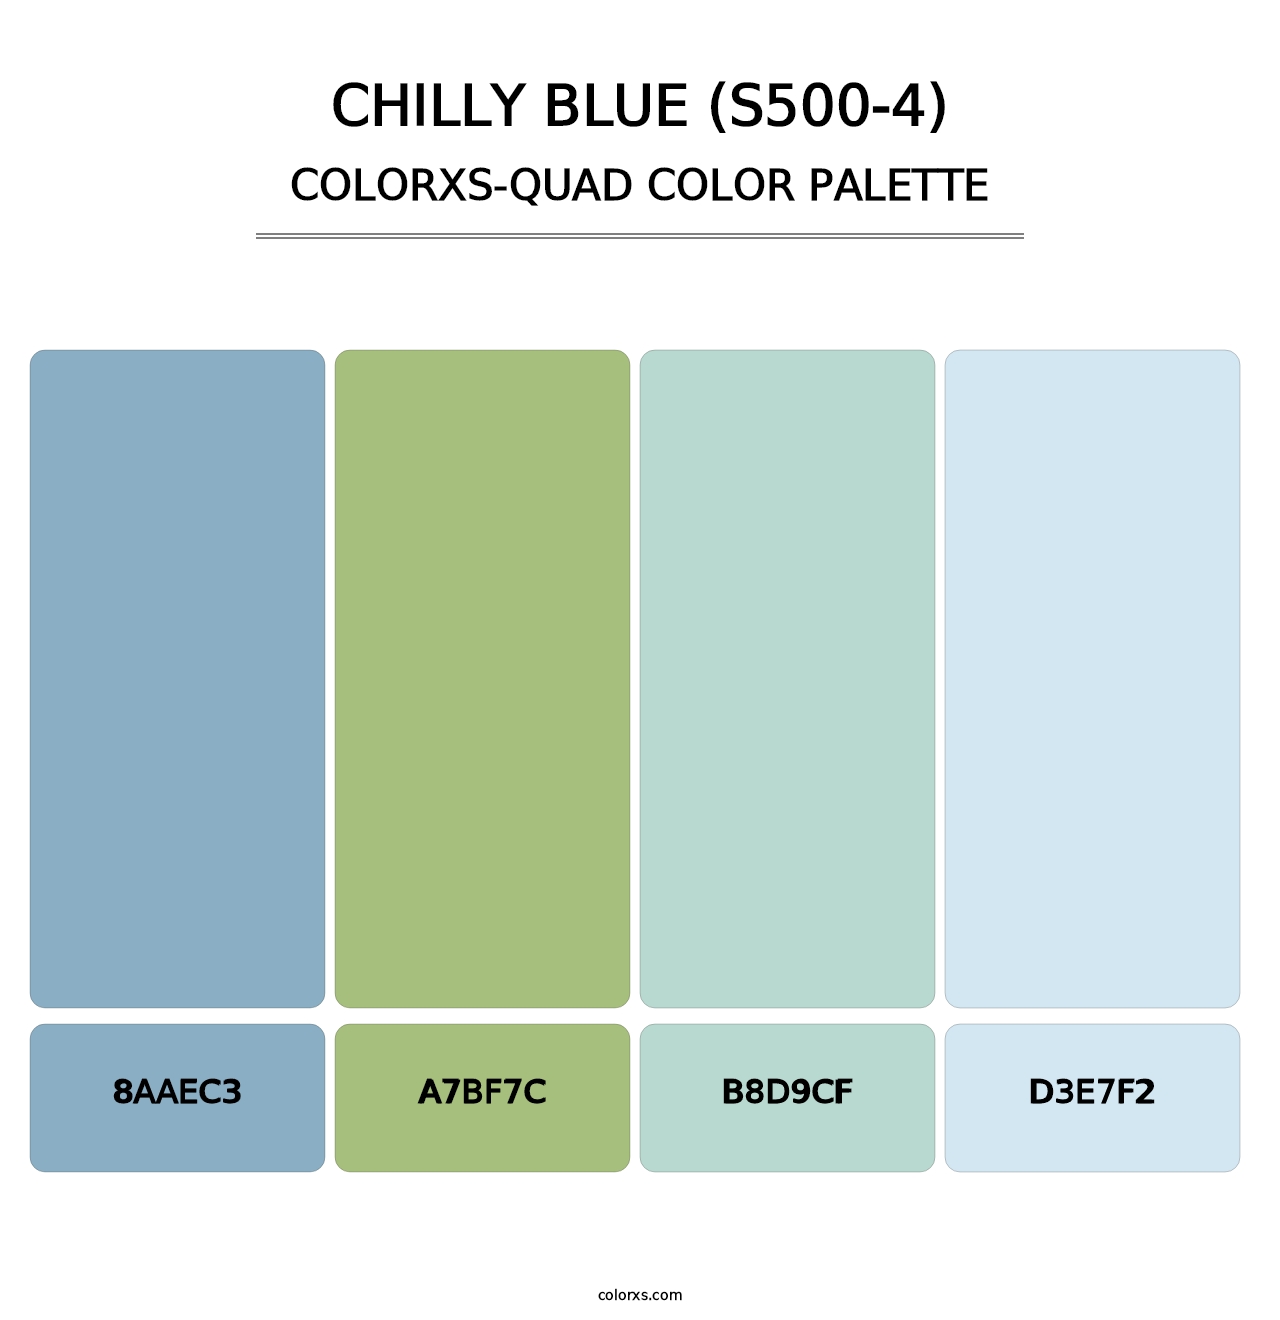 Chilly Blue (S500-4) - Colorxs Quad Palette